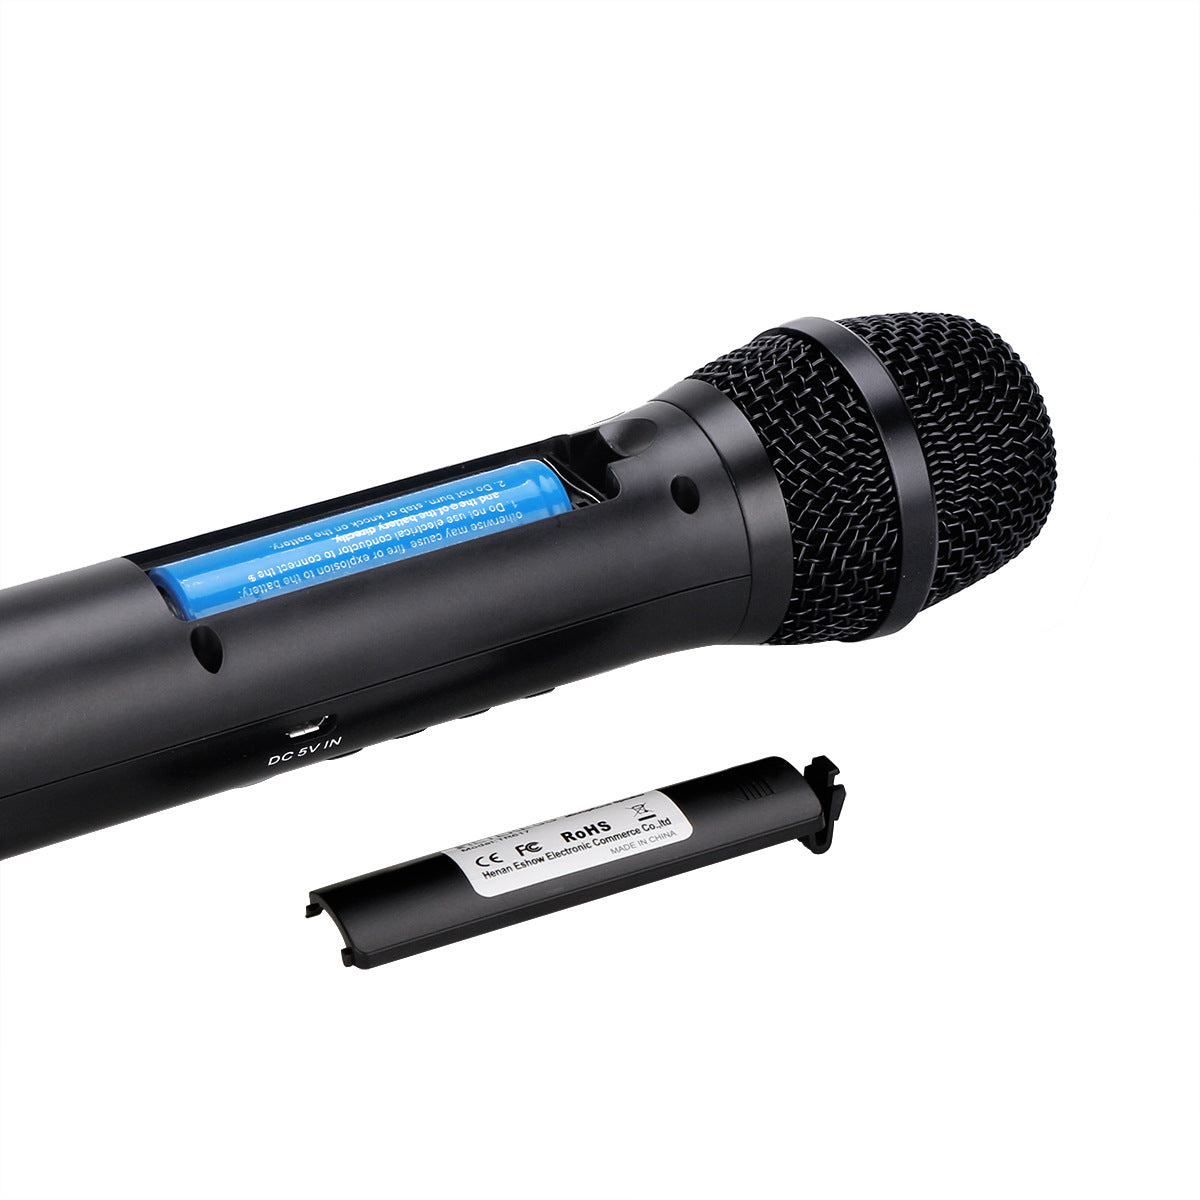 RETEKESS TR617 bluetooth Wireless Microphone for Live Broadcast Built-in Speaker Music Player Mic for Karaoke KTV Mobile Phone